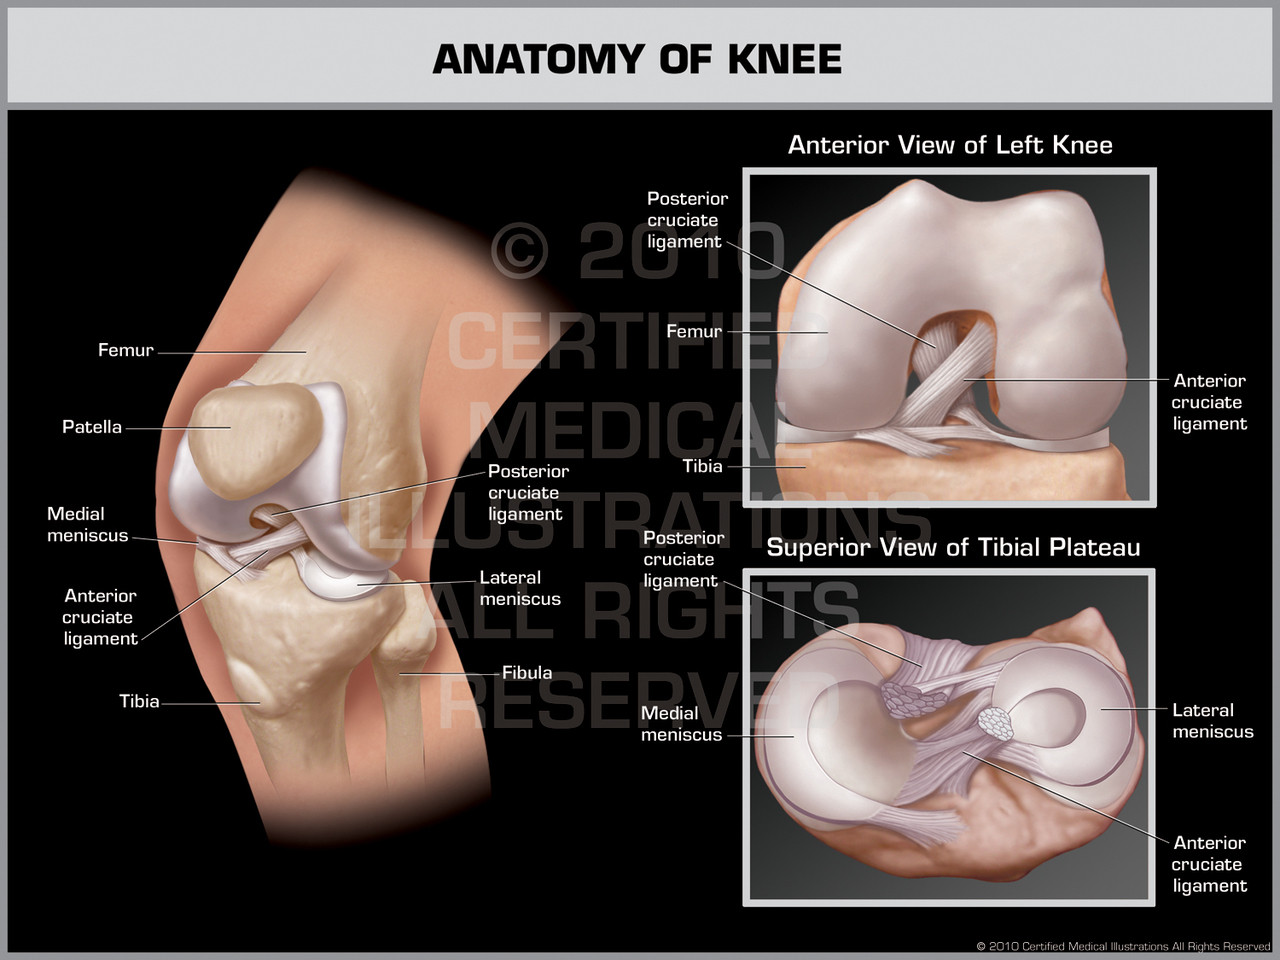 Anatomy of Knee 1